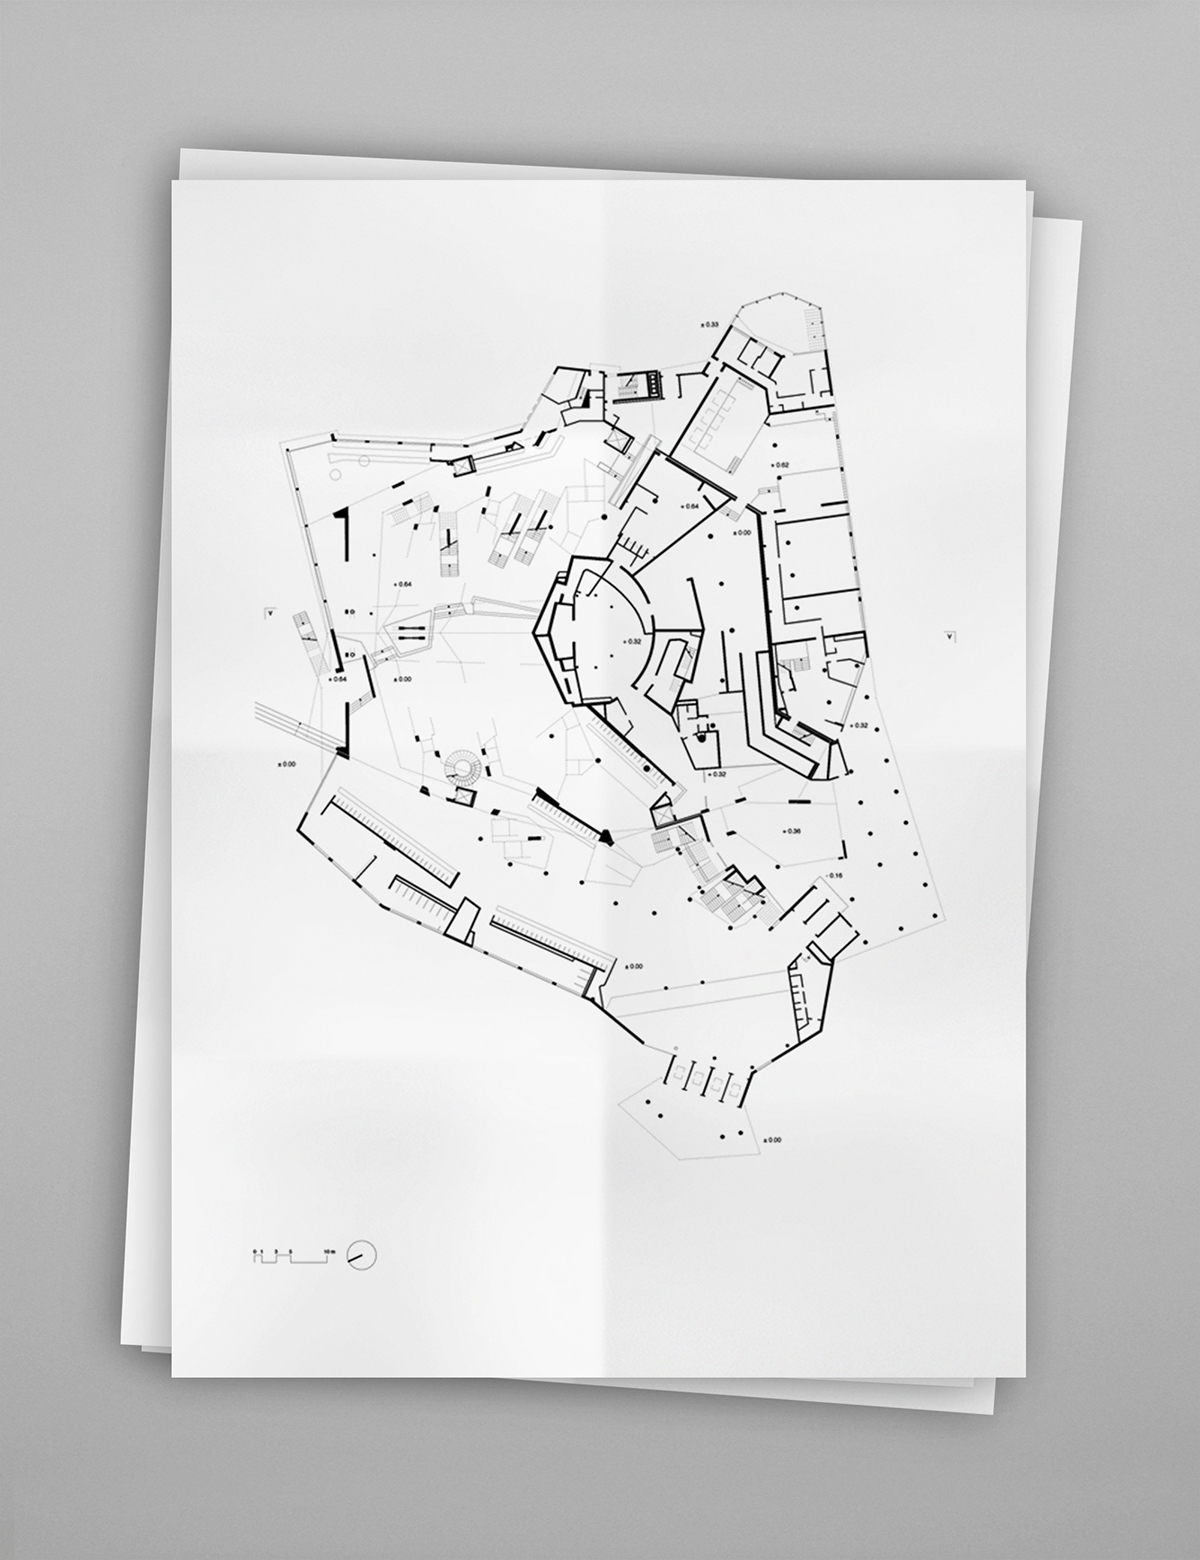 Berlin Philharmonic book redesign concert hall Hans Scharoun modern architecture project analysis